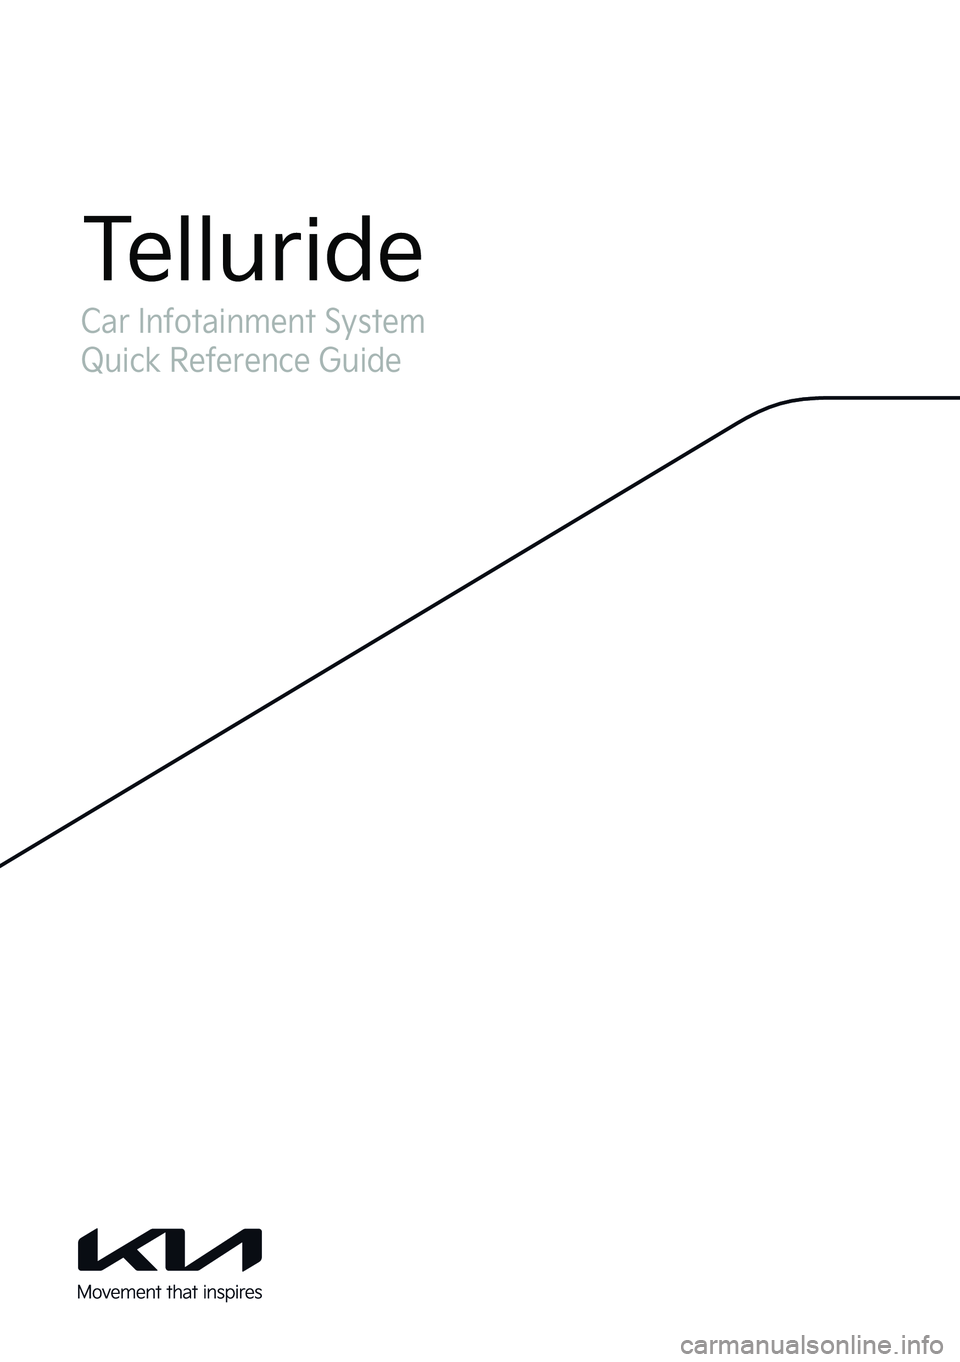 KIA TELLURIDE 2022  Navigation System Quick Reference Guide Car Infotainment System
Quick Reference Guide
Telluride  